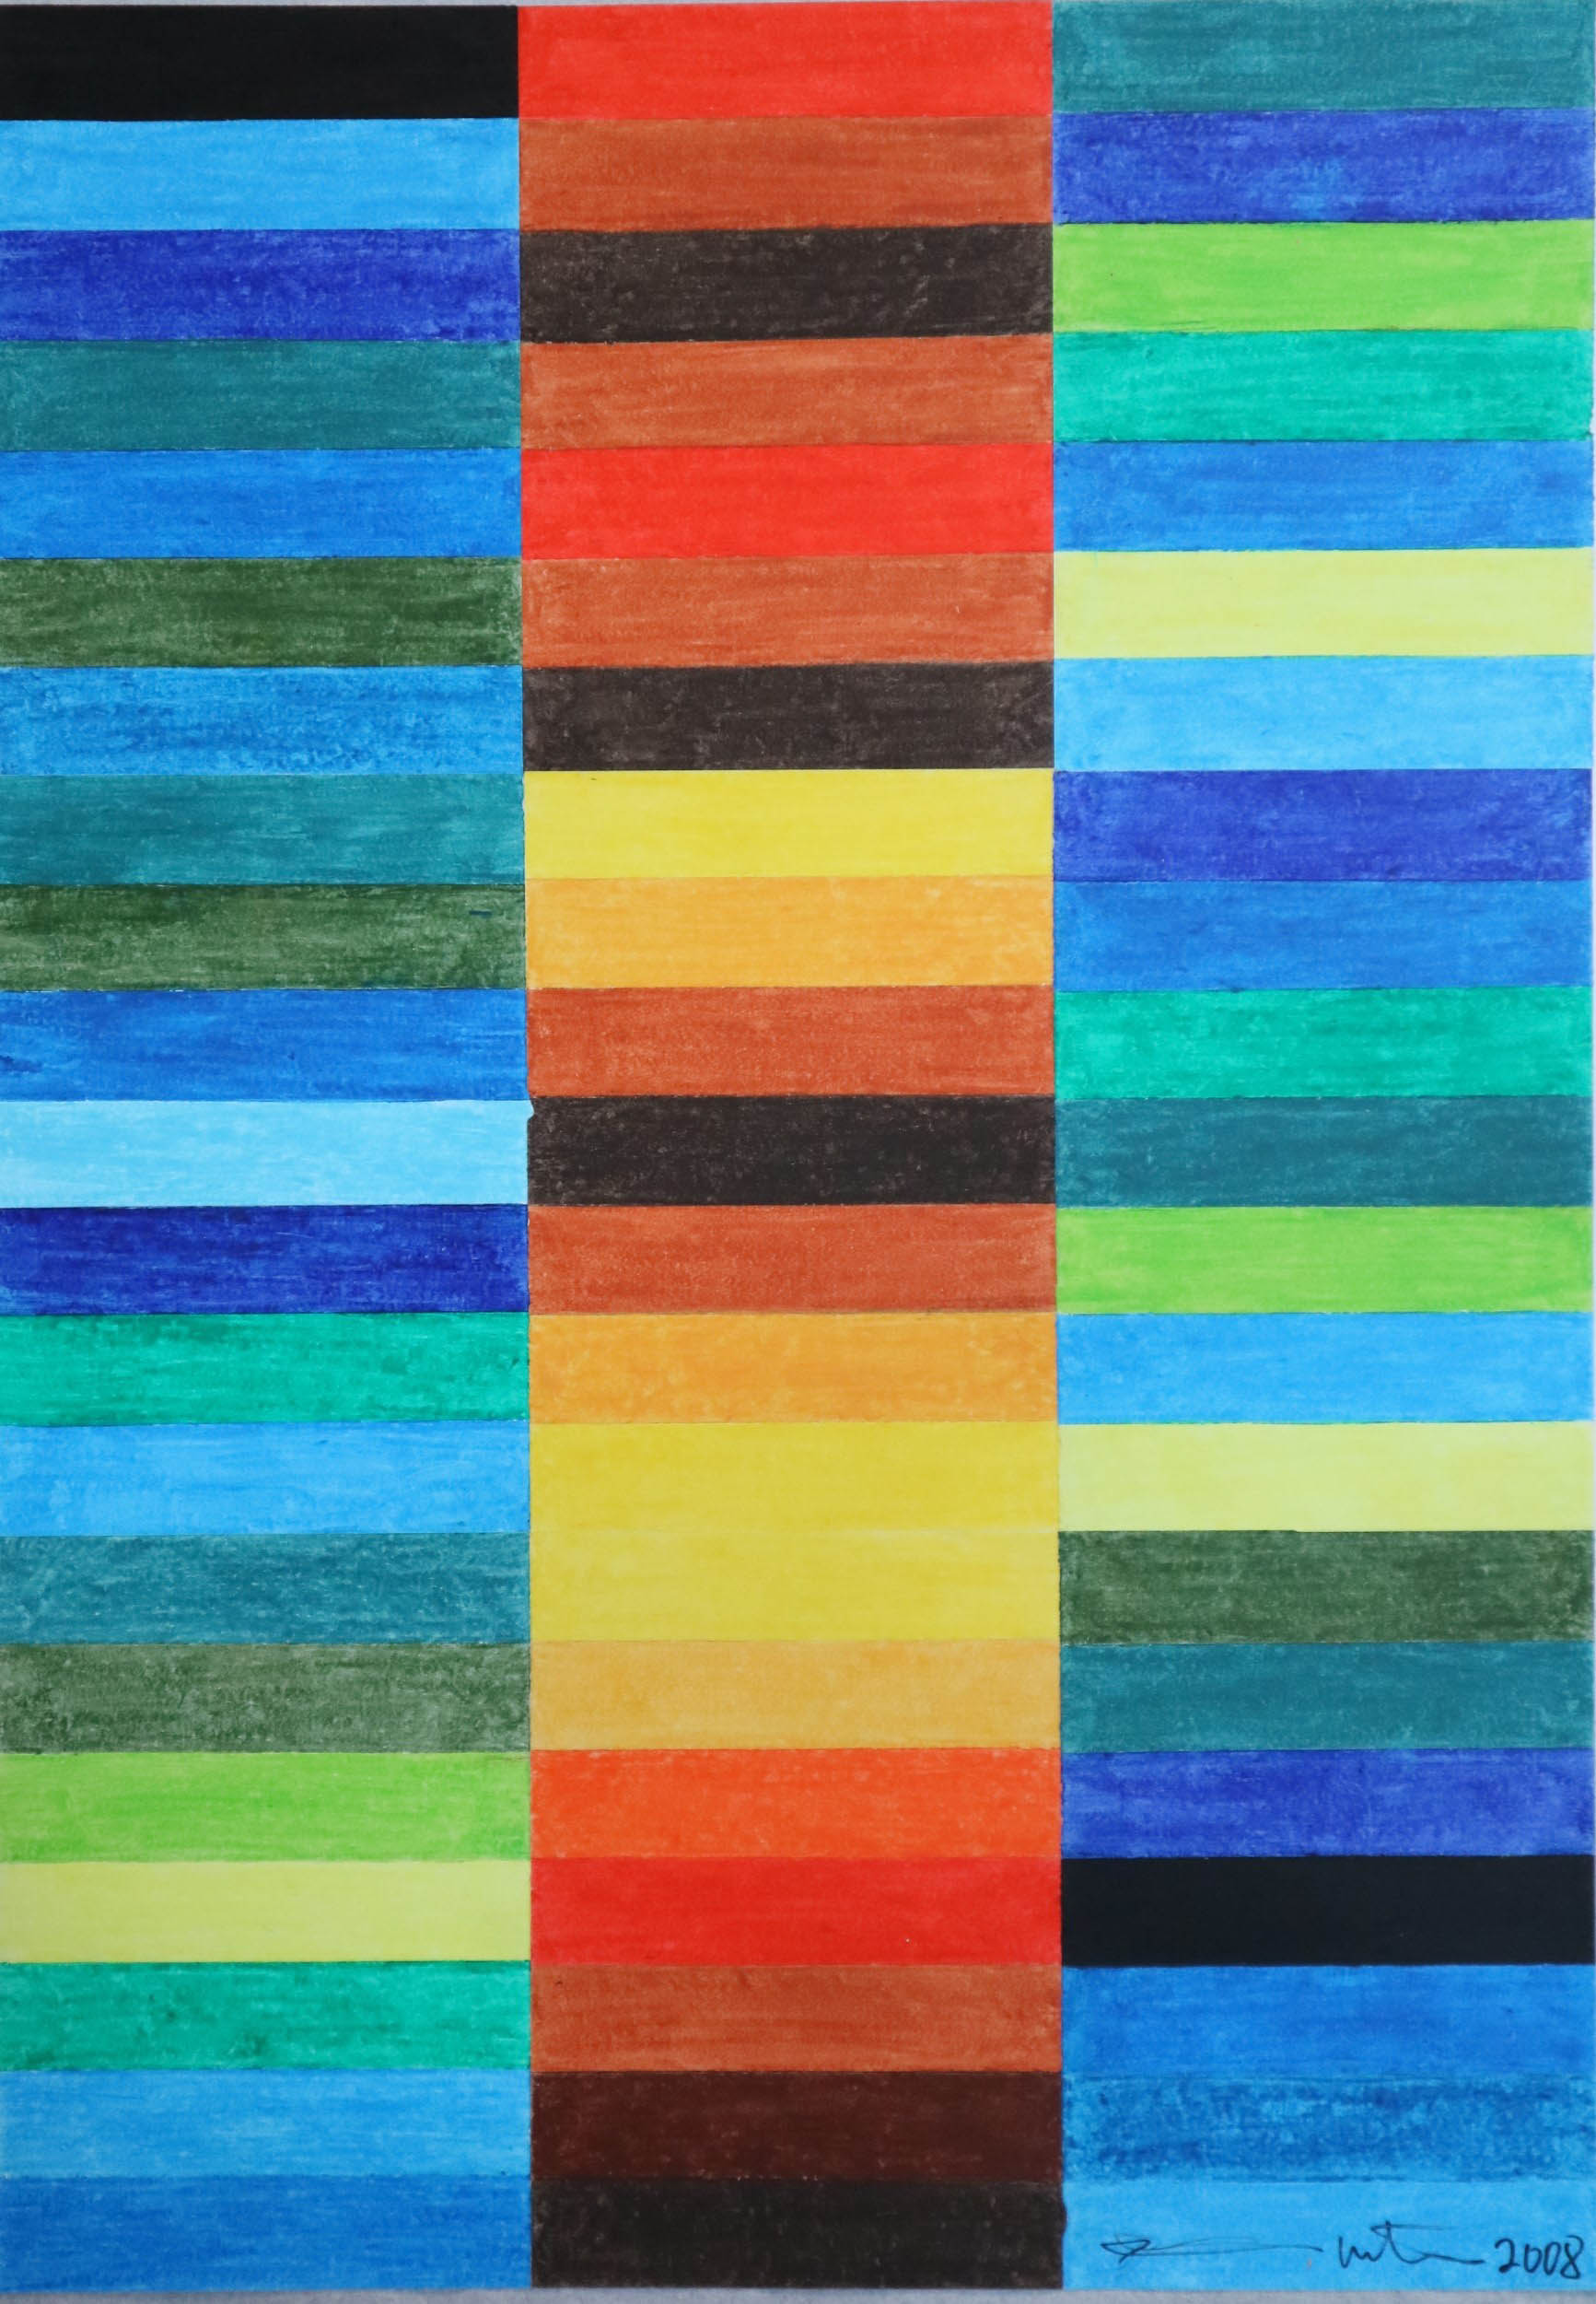 Teoria dei Colori 22 (disegno) di Nitsch, Hermann - Fondazione Morra (sec. XXI)